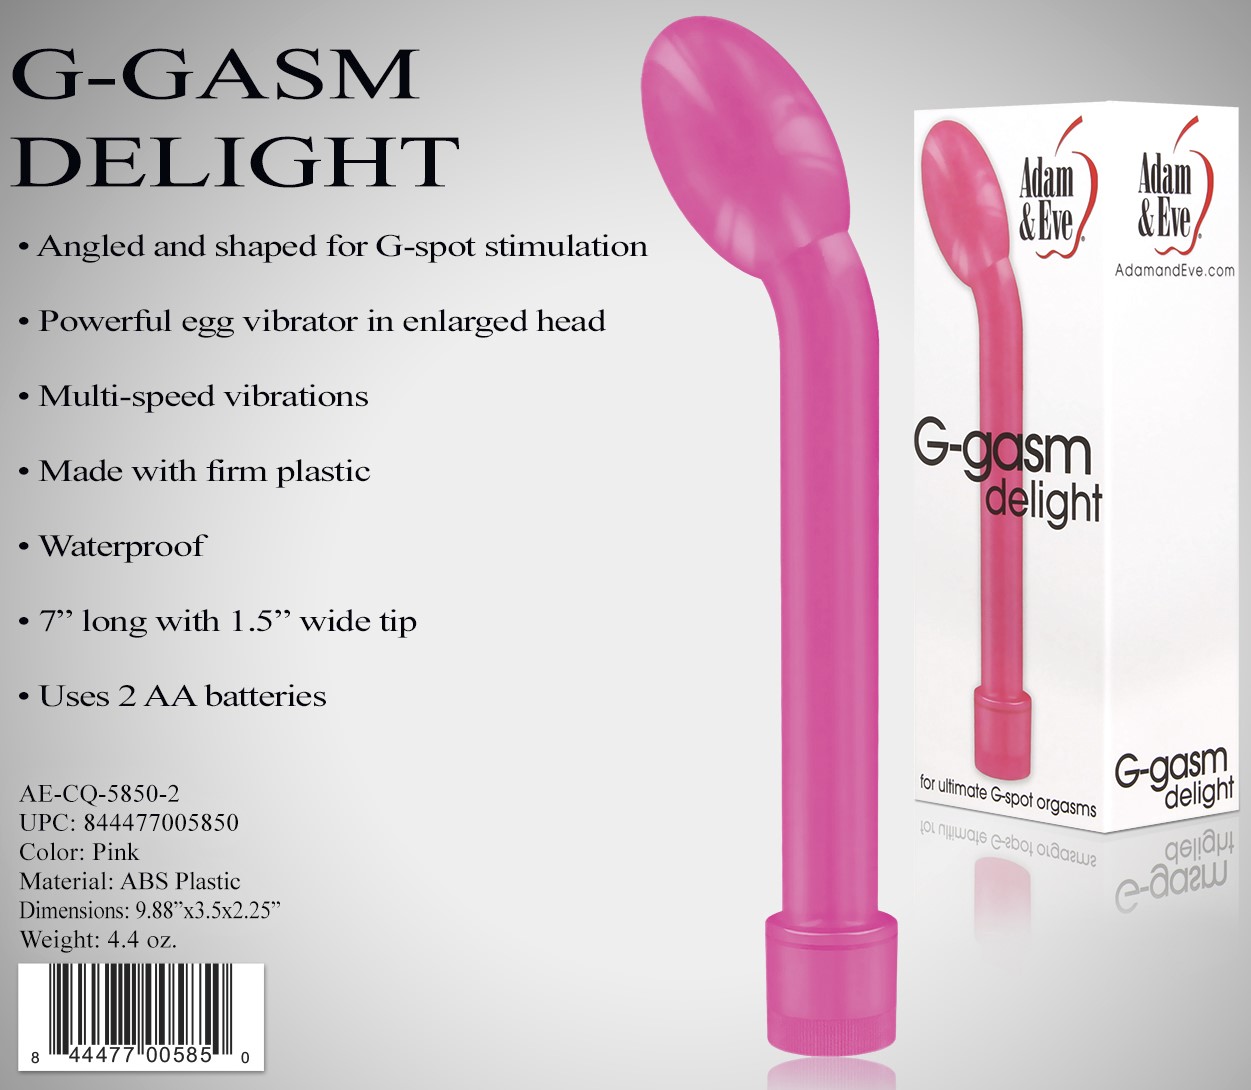 G-GASM DELIGHT